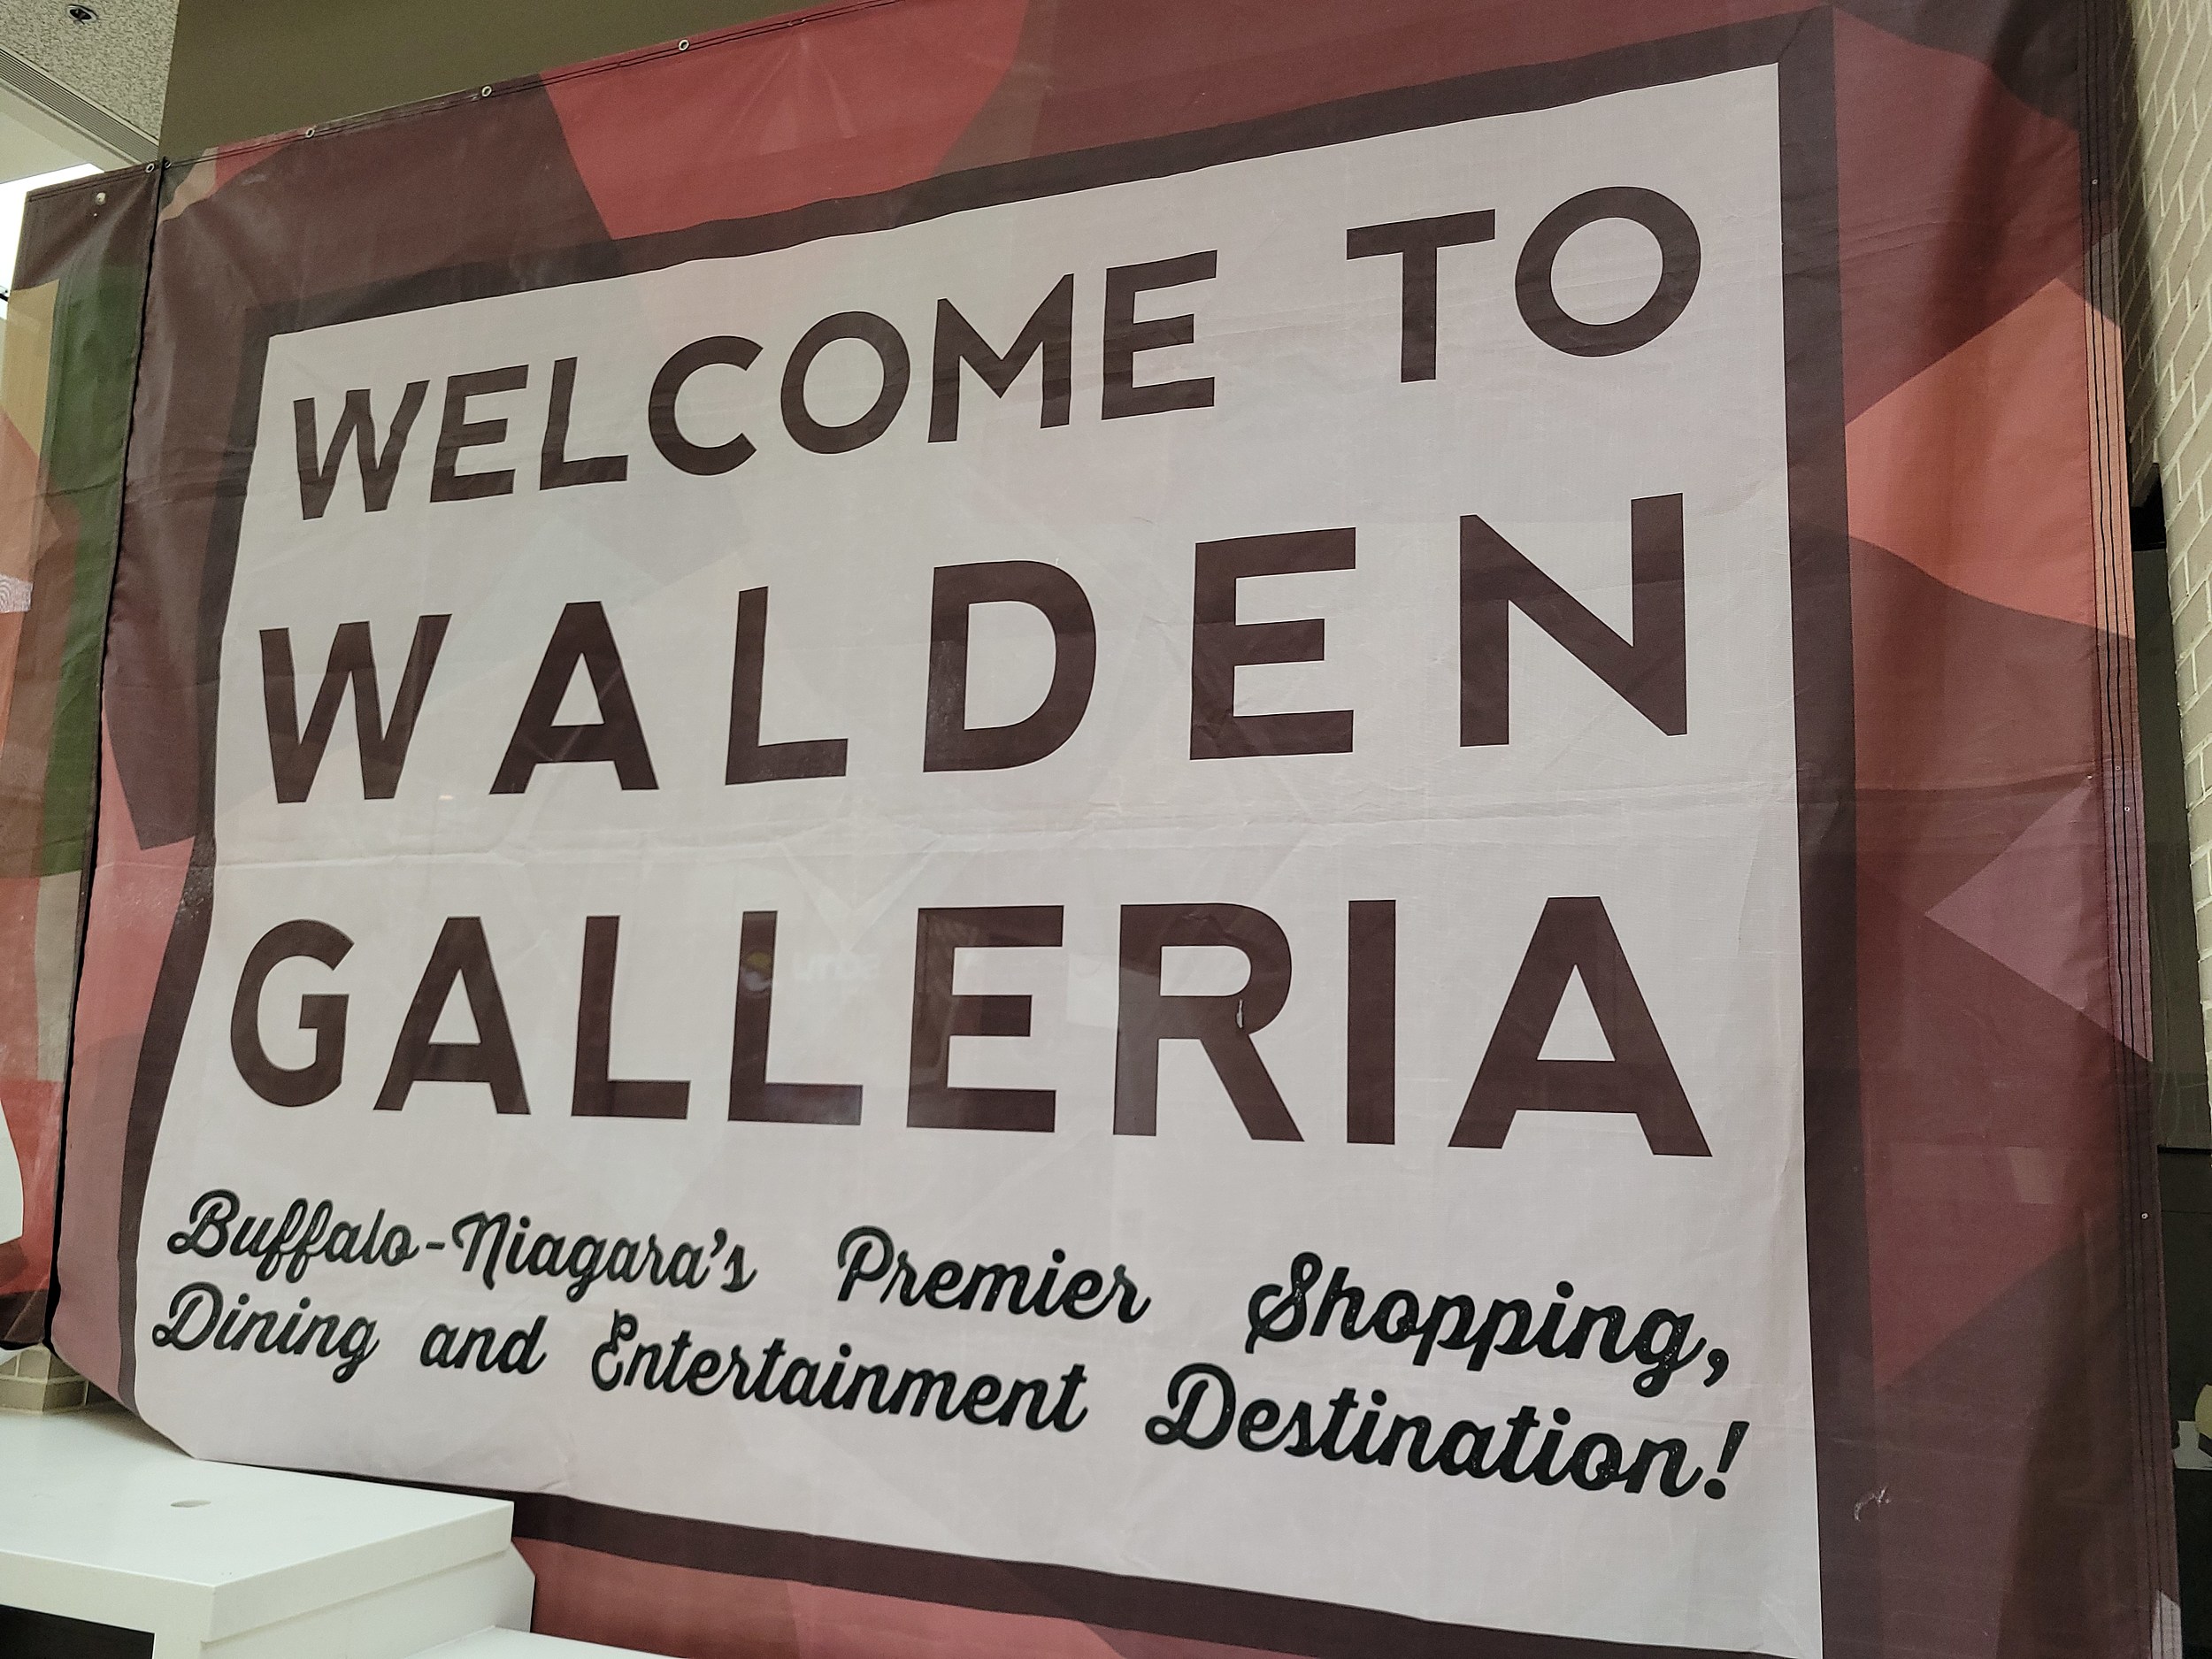 Walden Galleria Mall - Step Out Buffalo